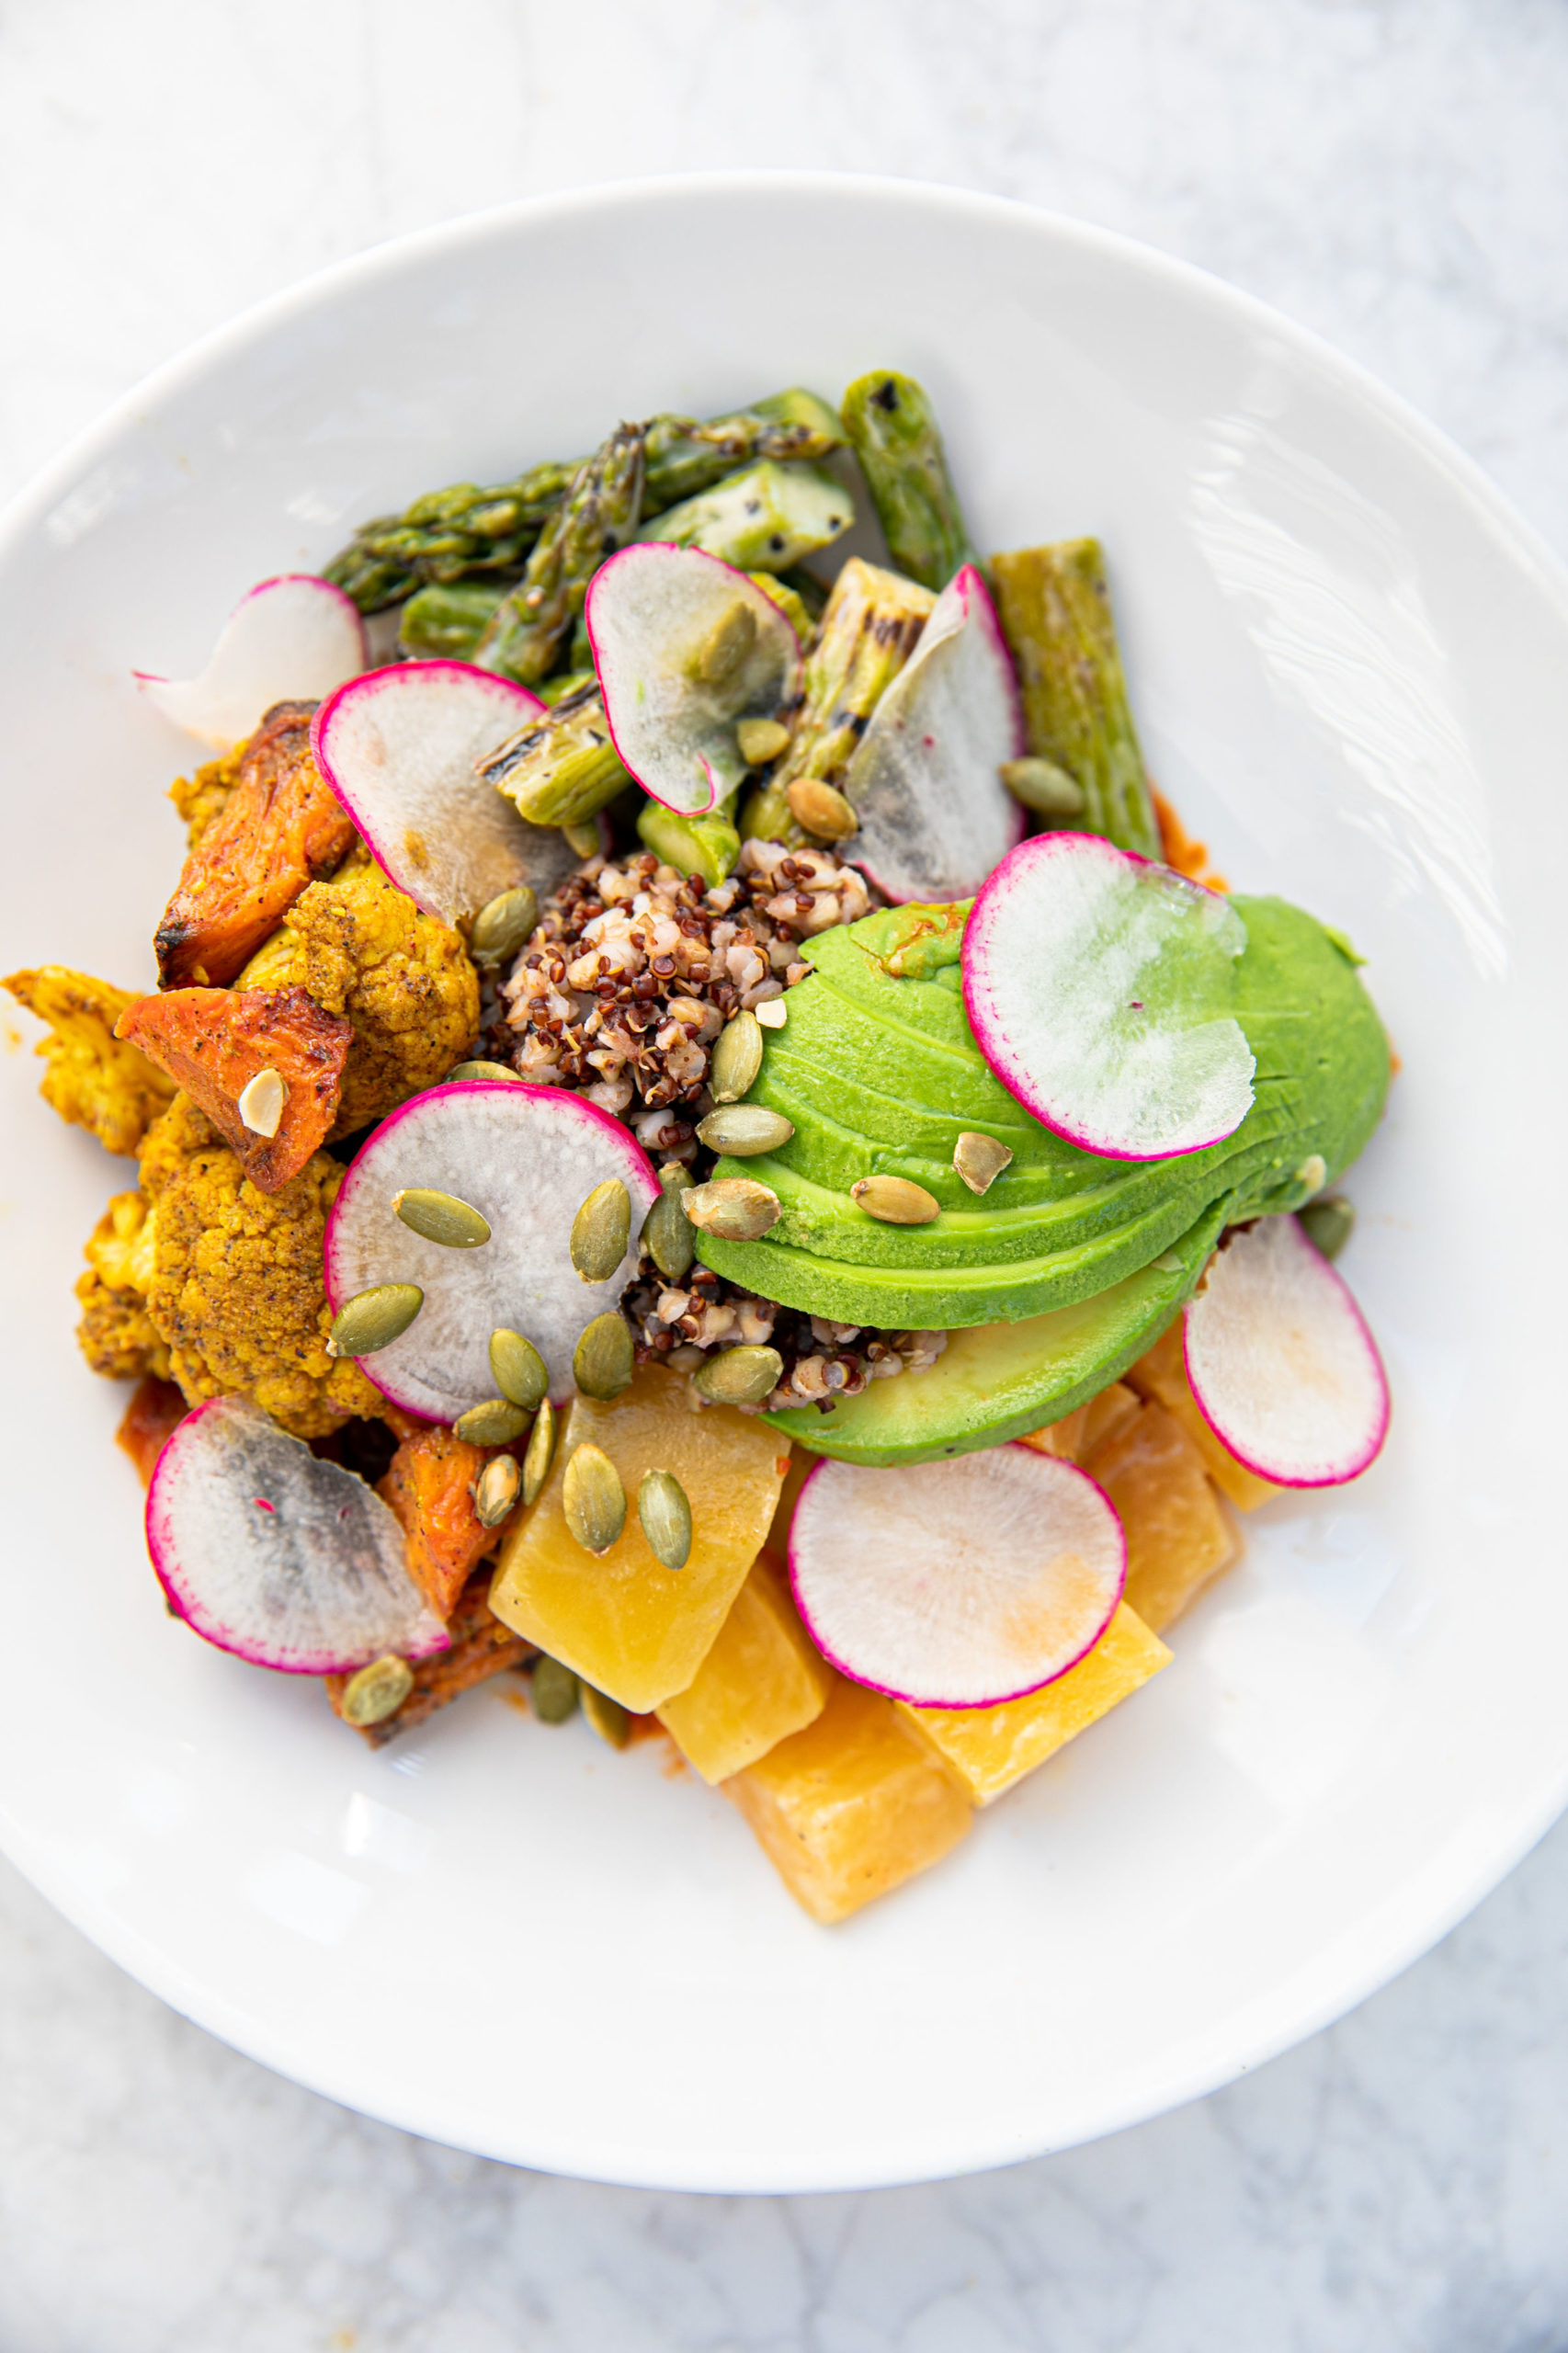 marina del rey takeout healthy vegan salad